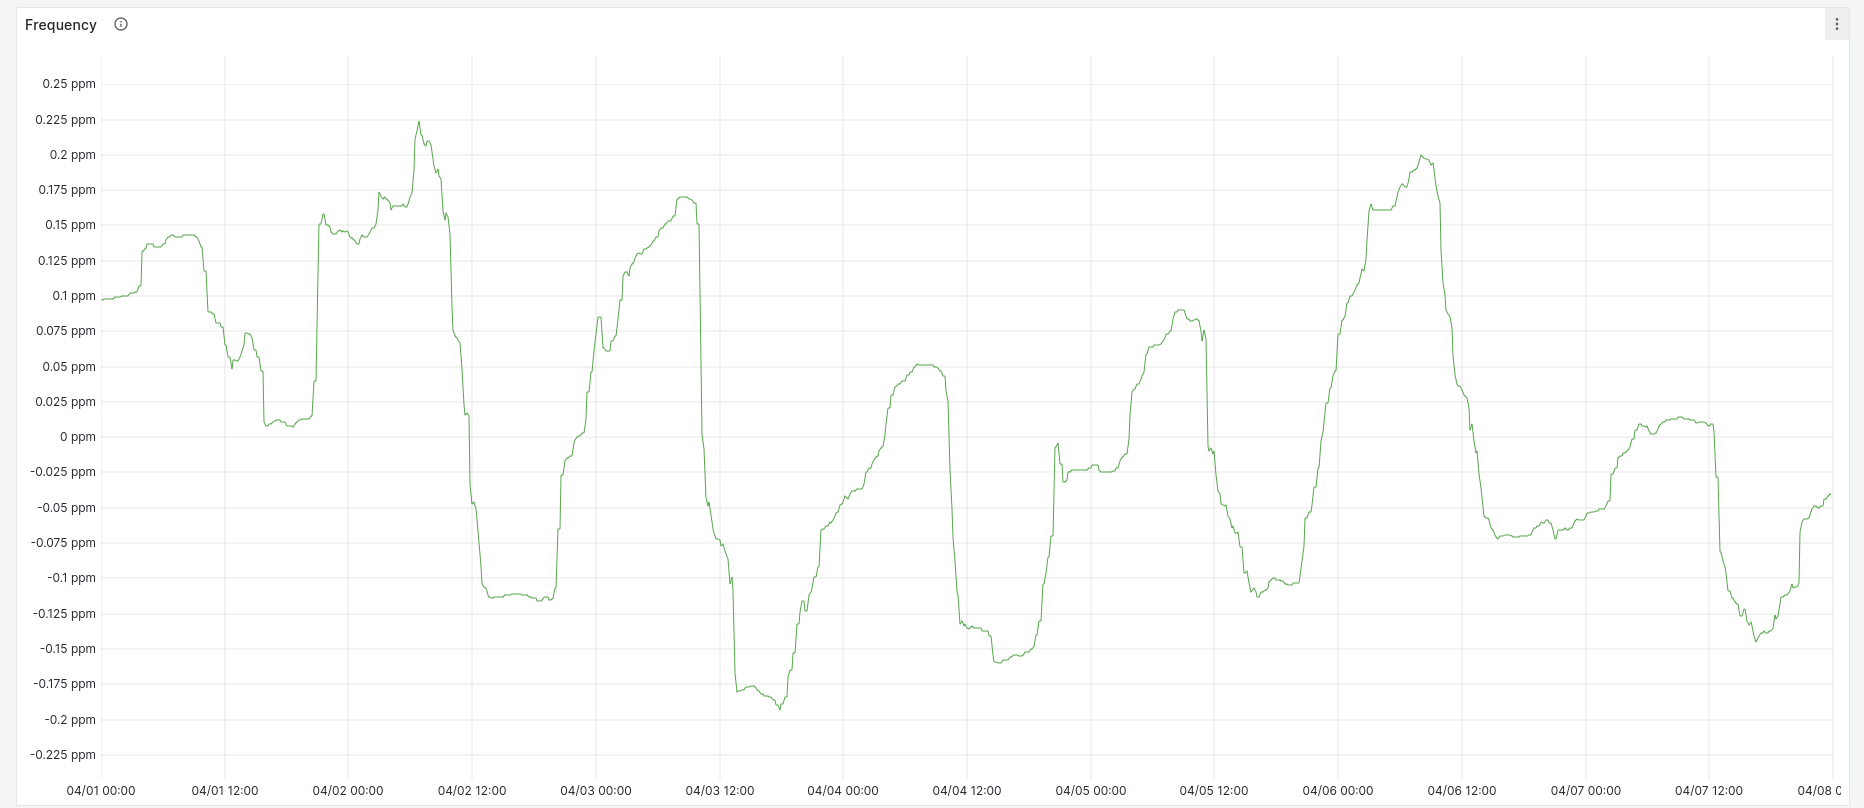 (Graph of BeagleBone system frequency error)